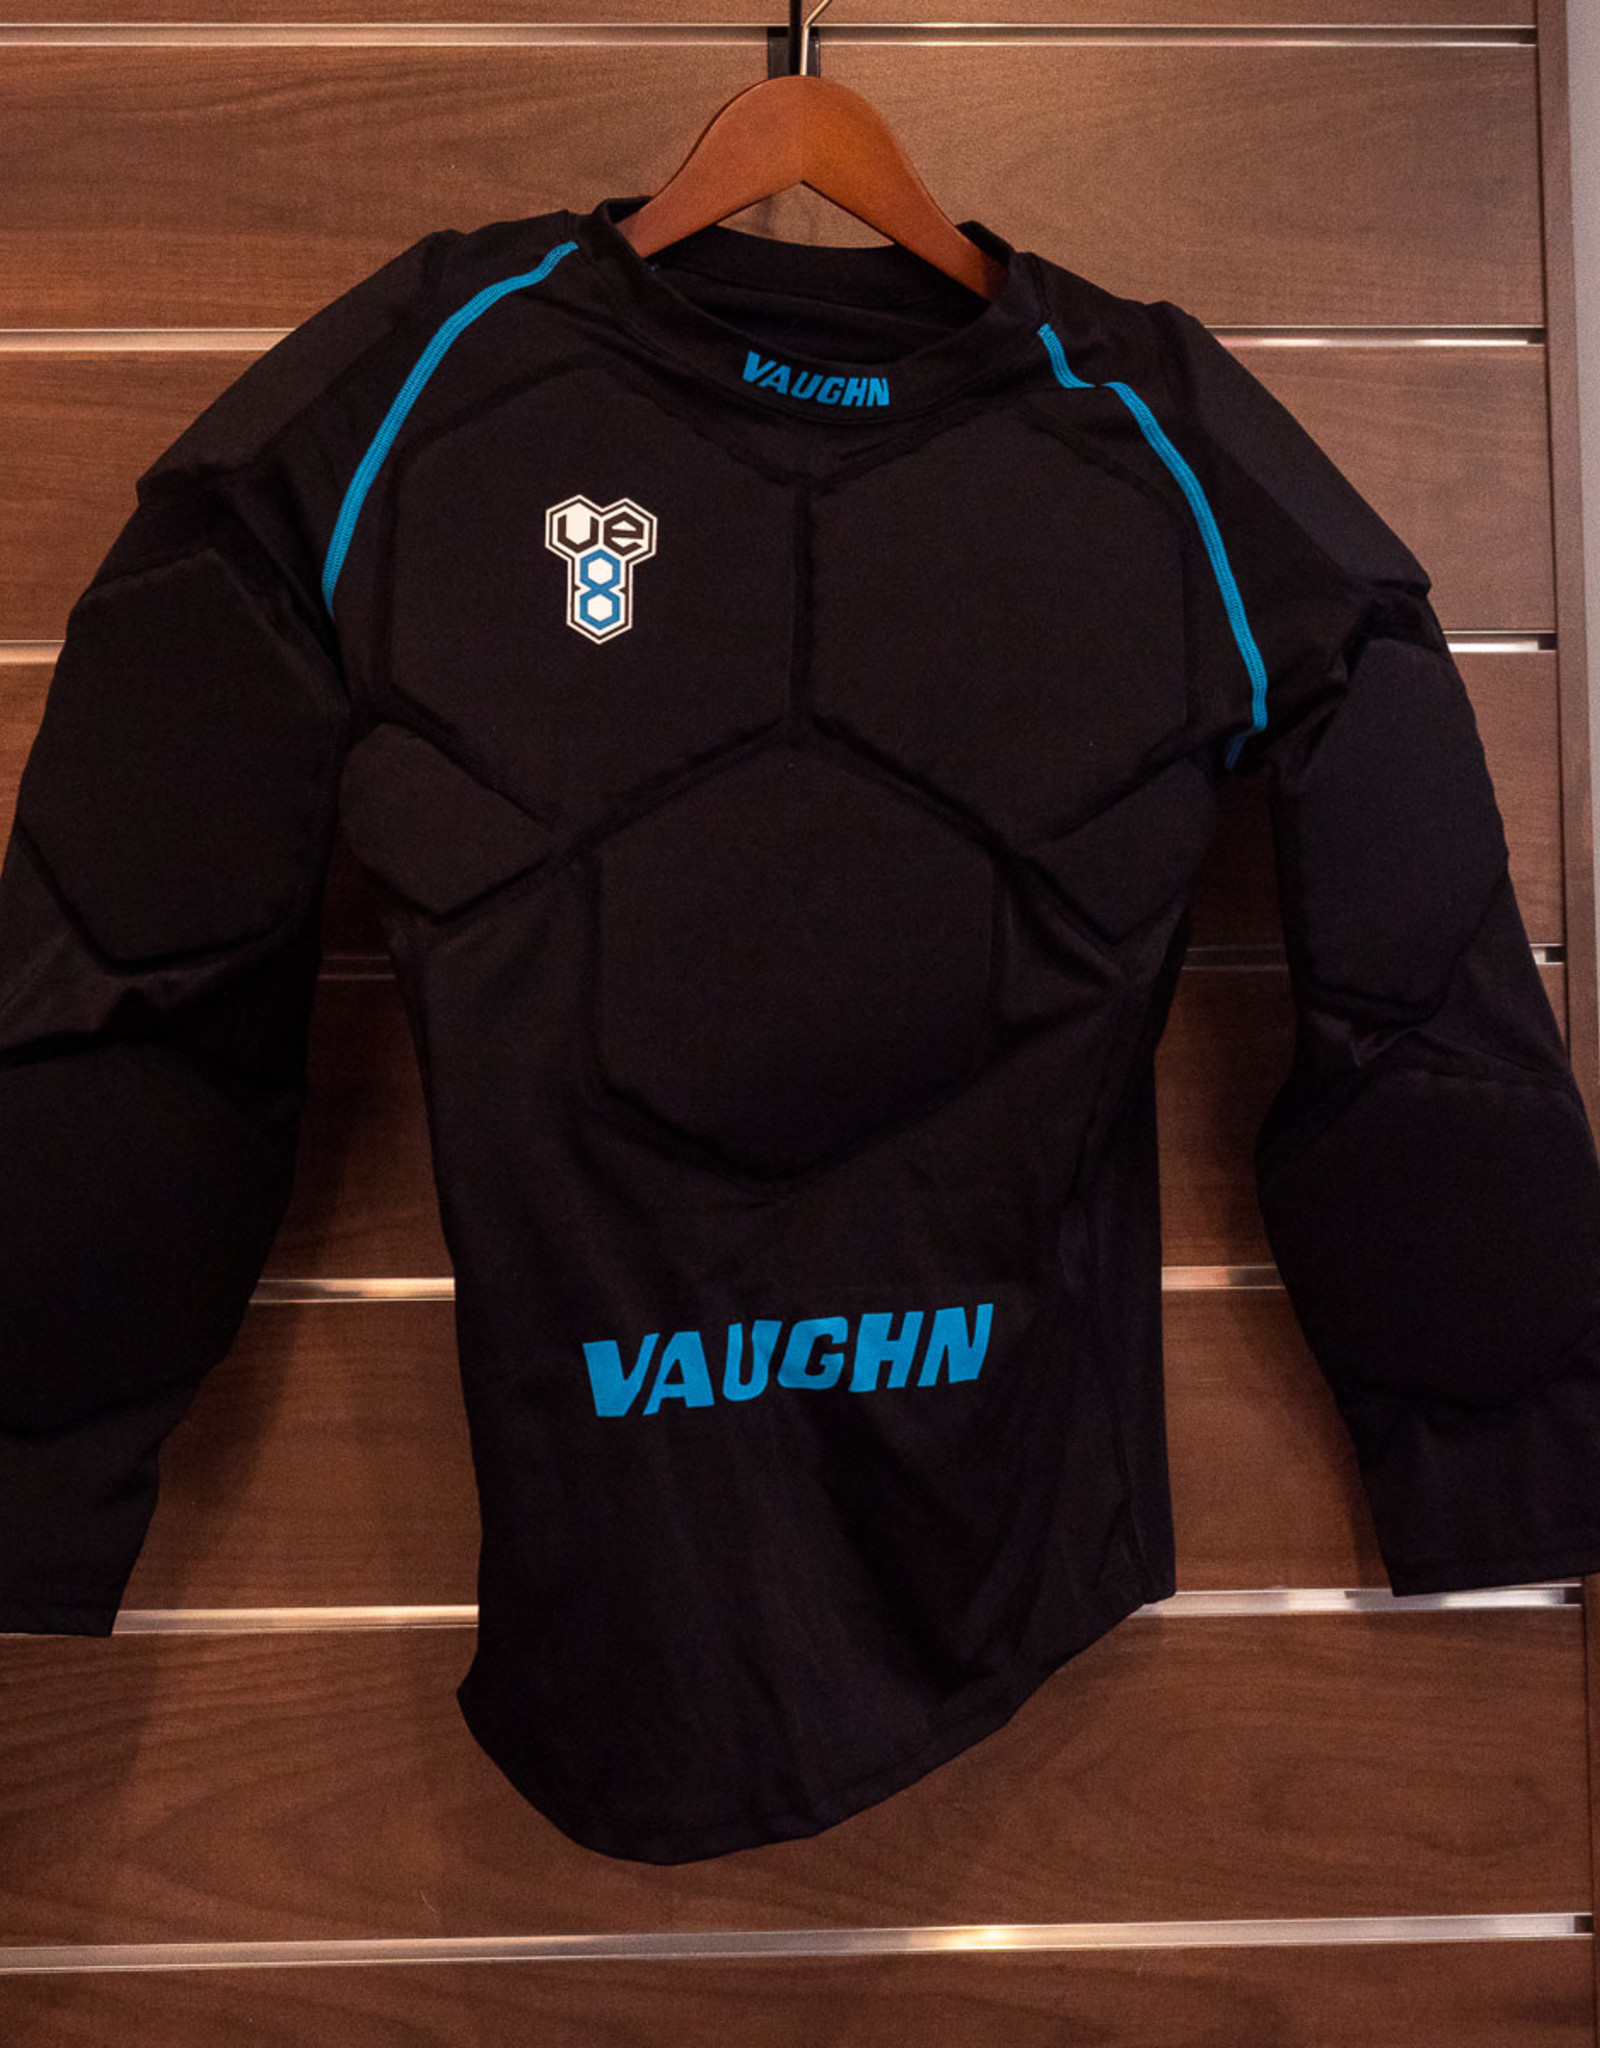 Vaughn Vaughn VE8 Padded Compression Pants - LG